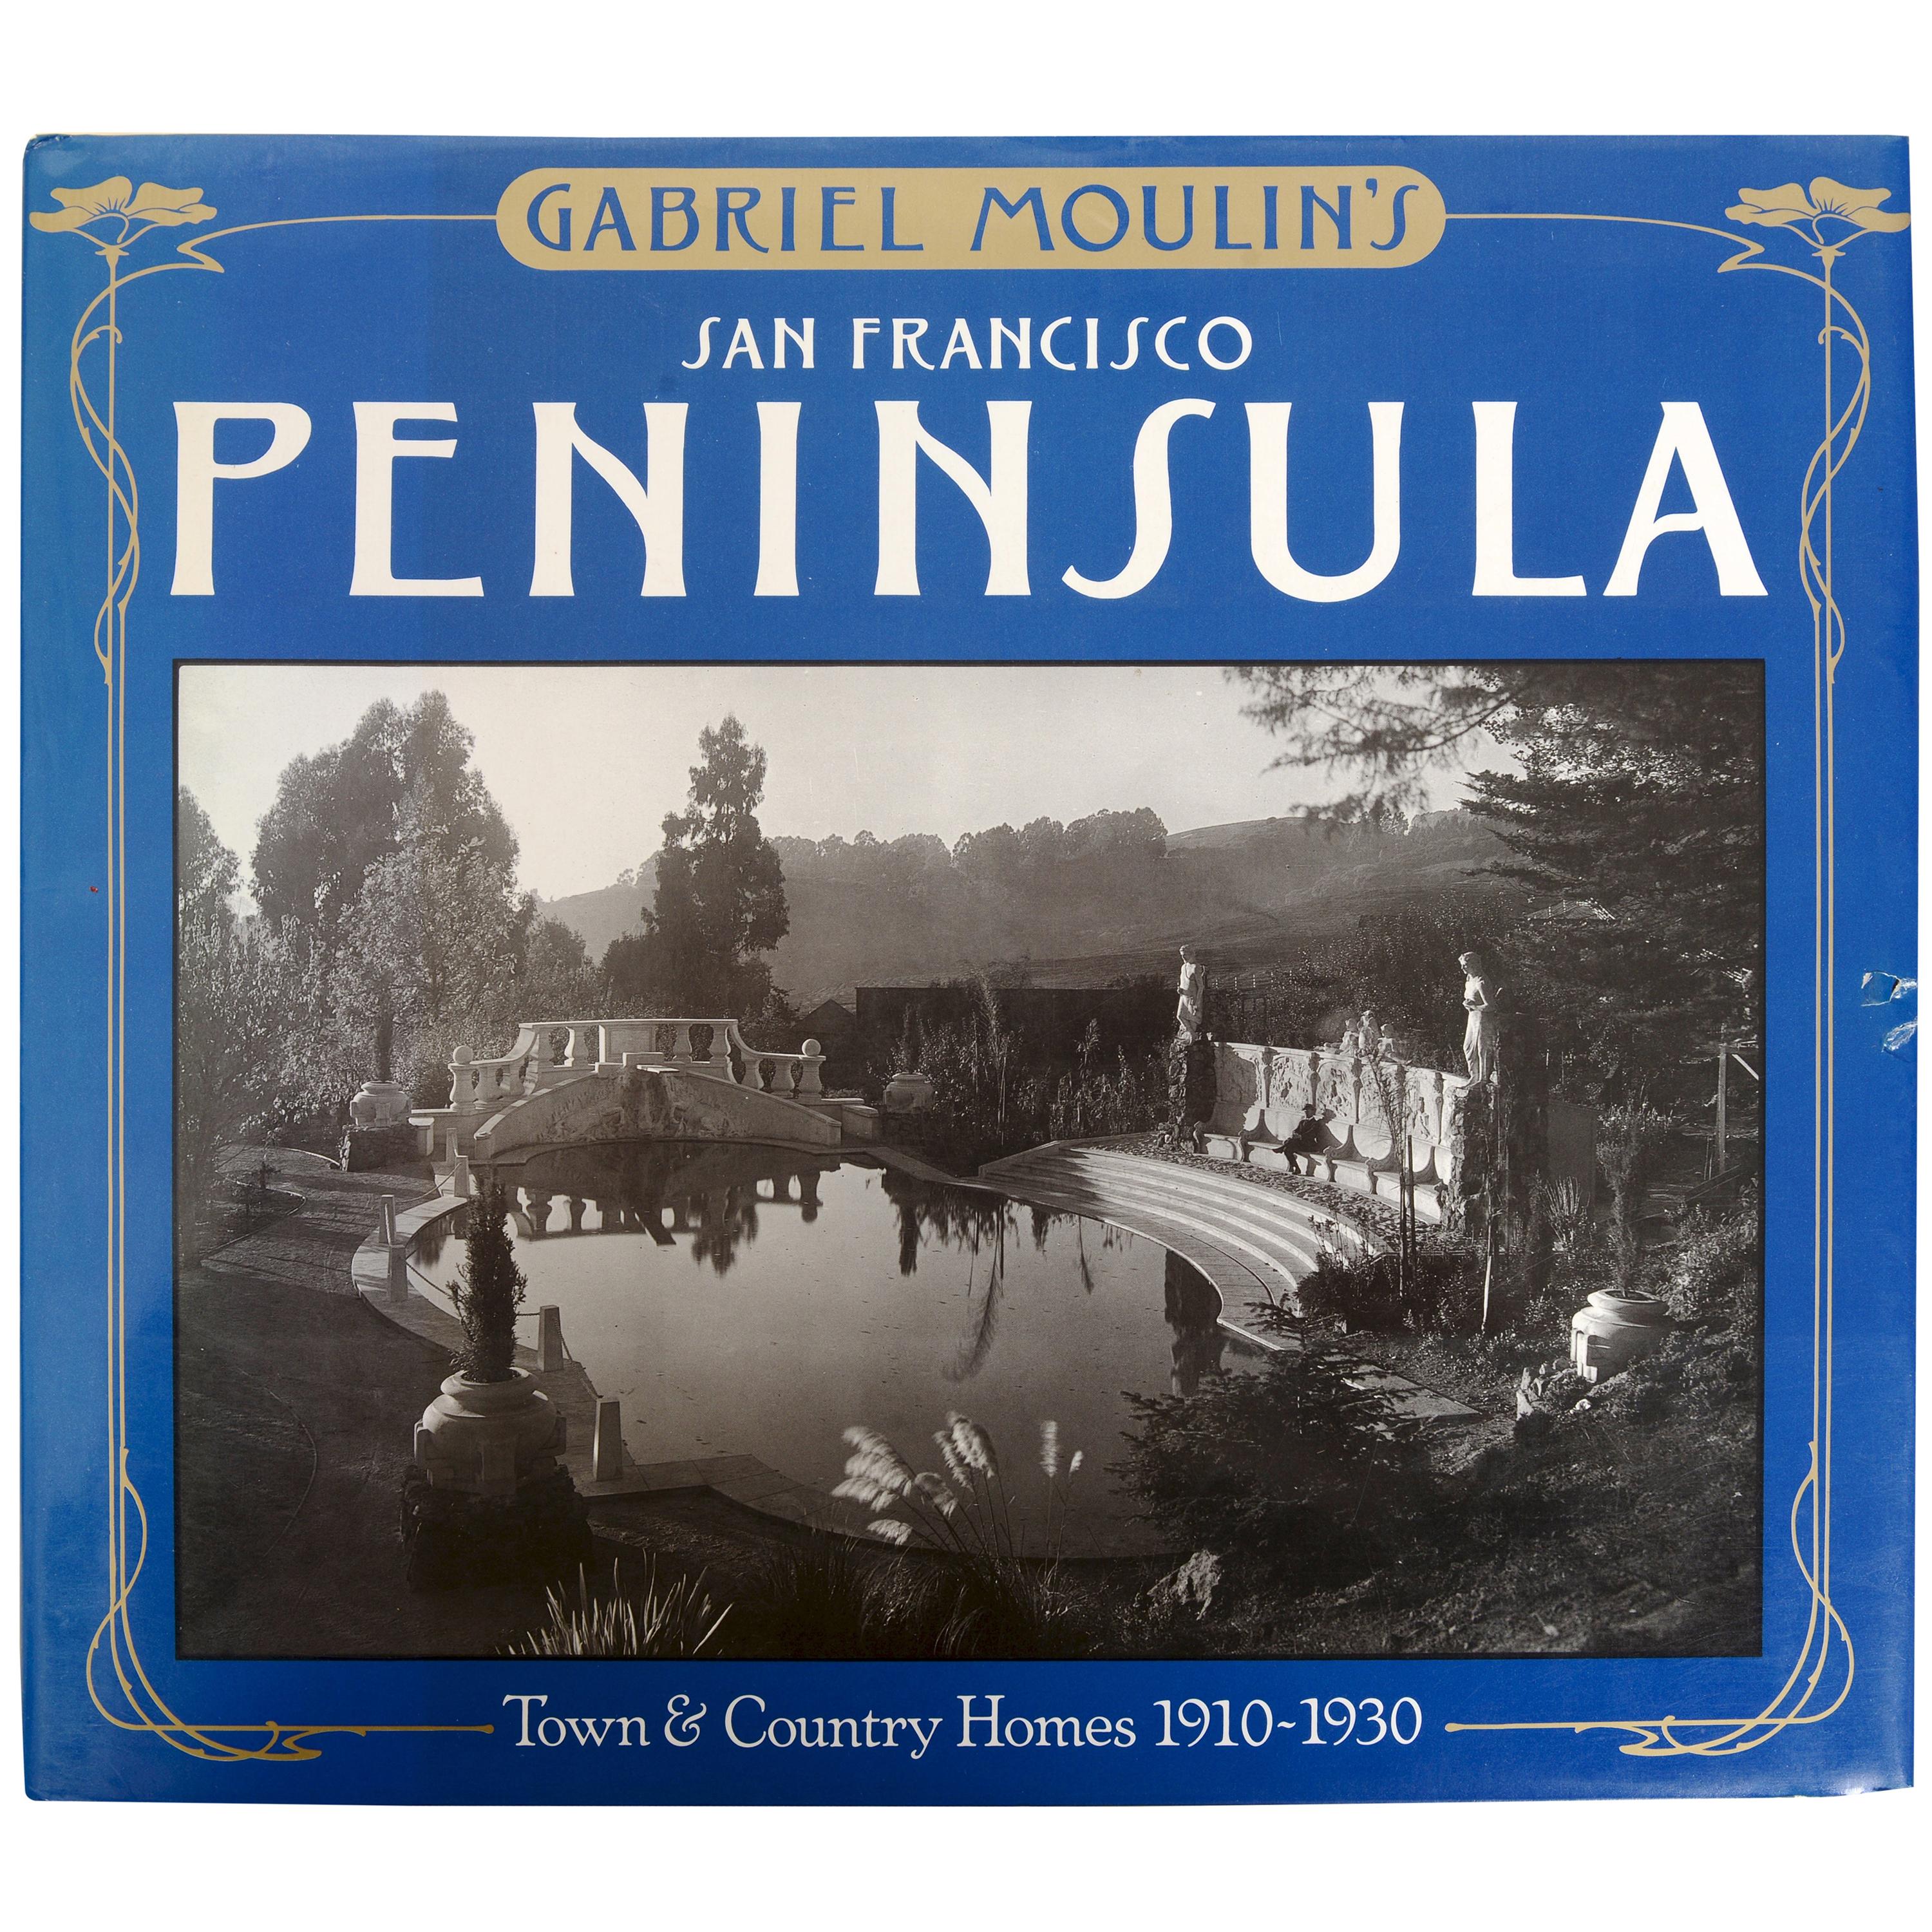 Gabriel Moulin's San Francisco Peninsula: Town & Country Homes, 1910-1930